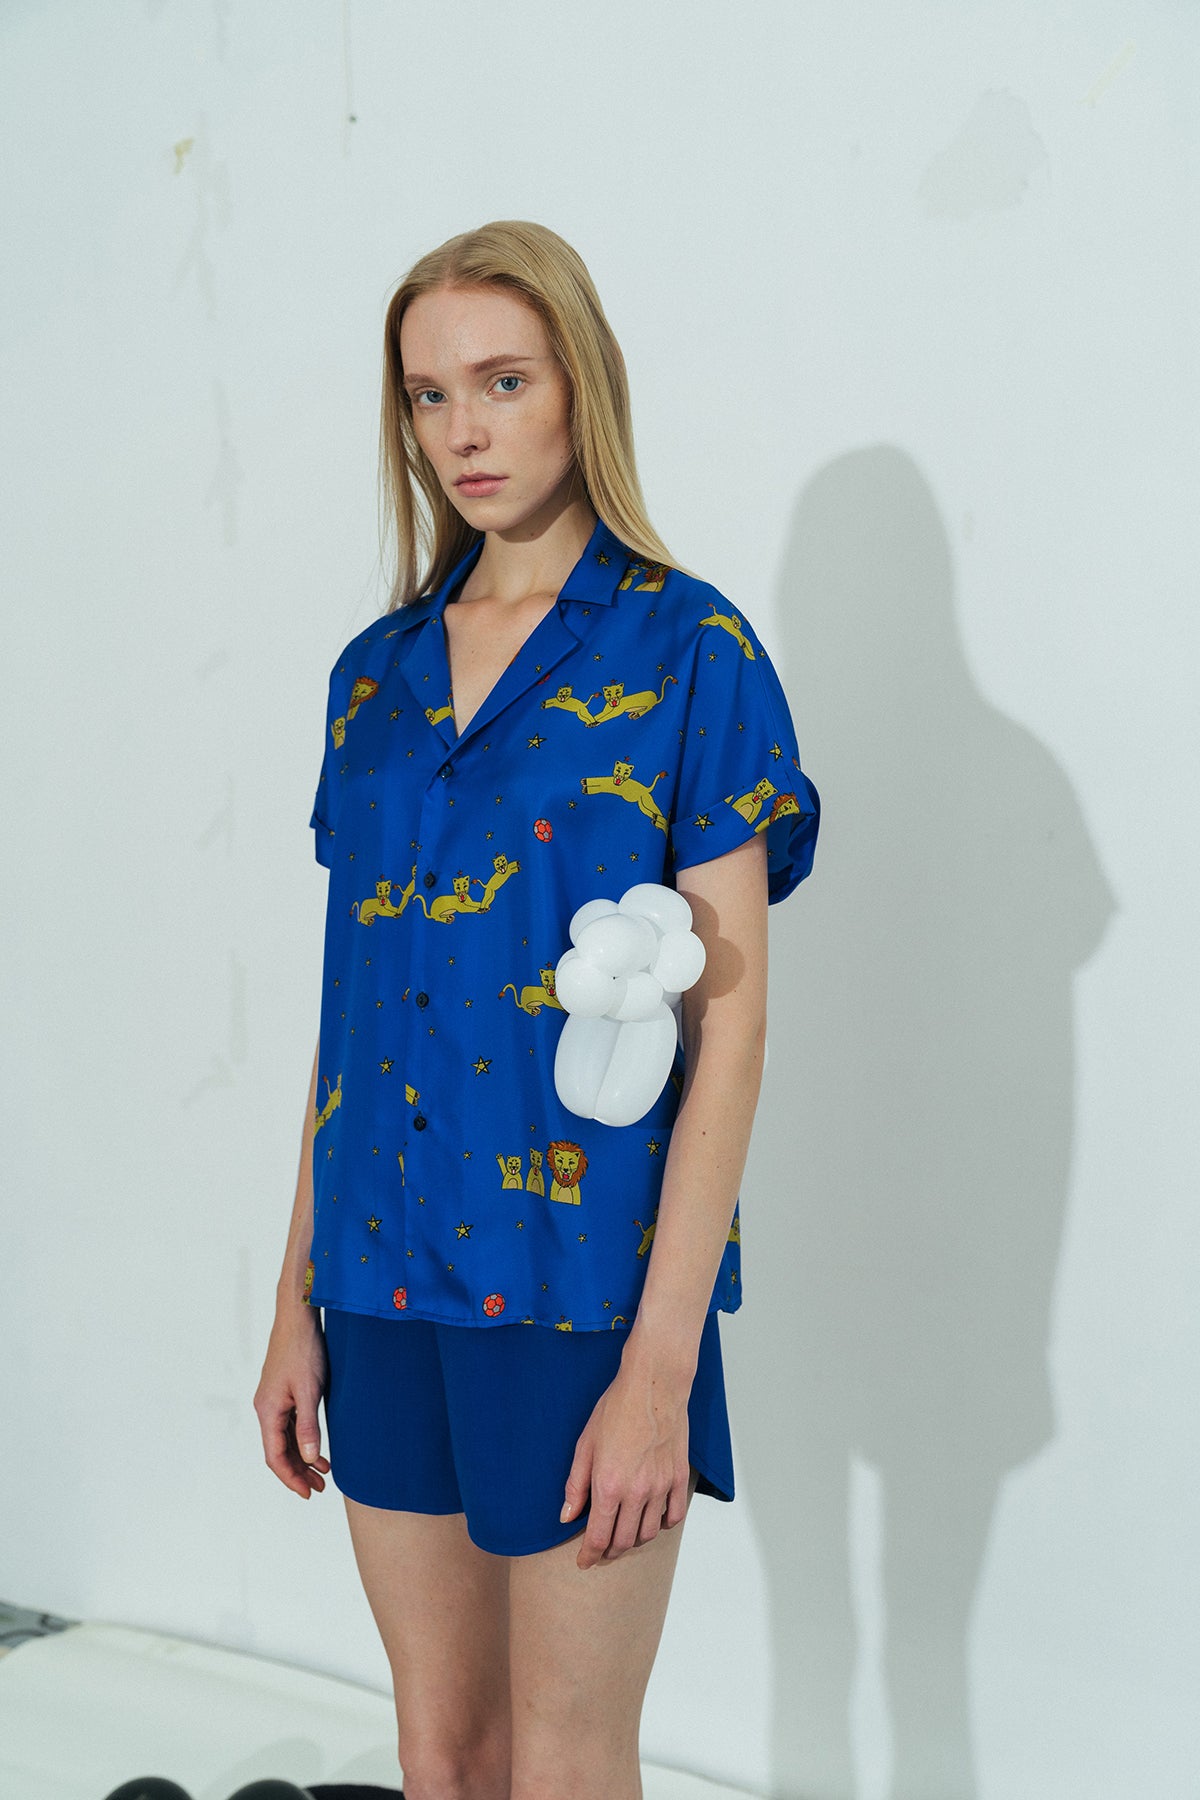 Shantall Lacayo x Lost Pattern Silk Shirt - Electric Blue - LOST PATTERN Shirt